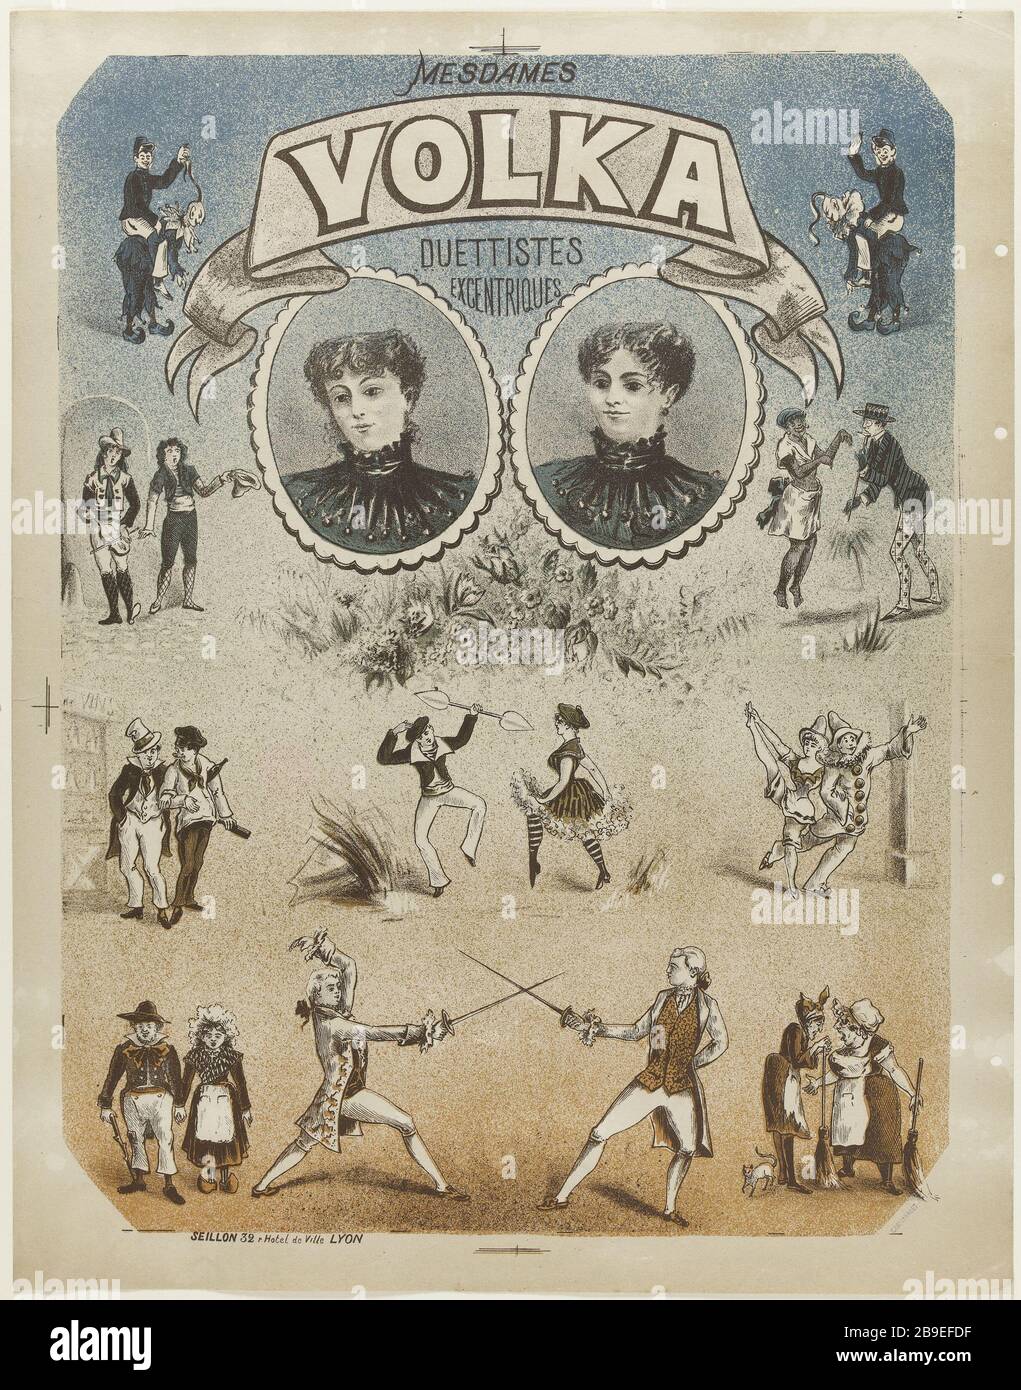 LADIES Volka, Duo EXZENTRISCHE 'Mesdames Volka, Duettistes excentriques'. Lithographie. 1880-1900. Paris, musée Carnavalet. Stockfoto